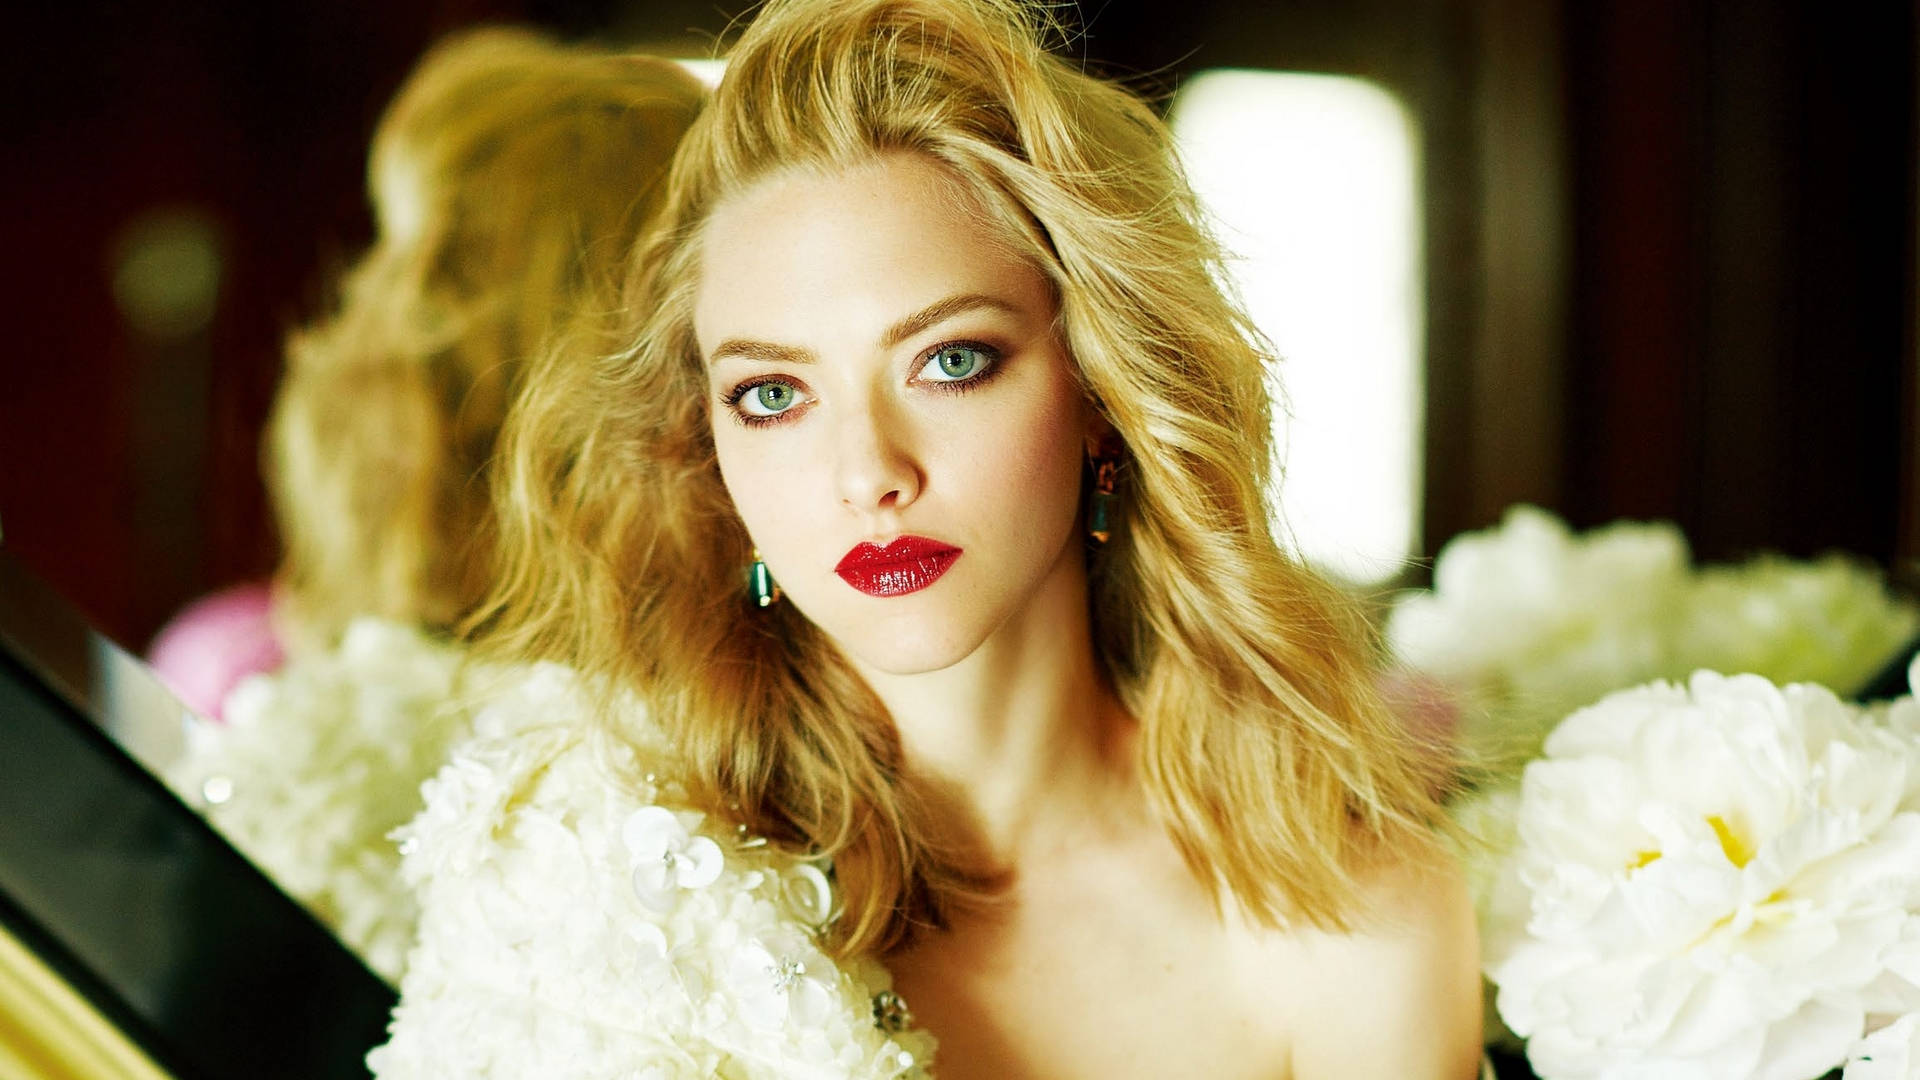 Beautiful Blonde Wearing Red Lipstick Background